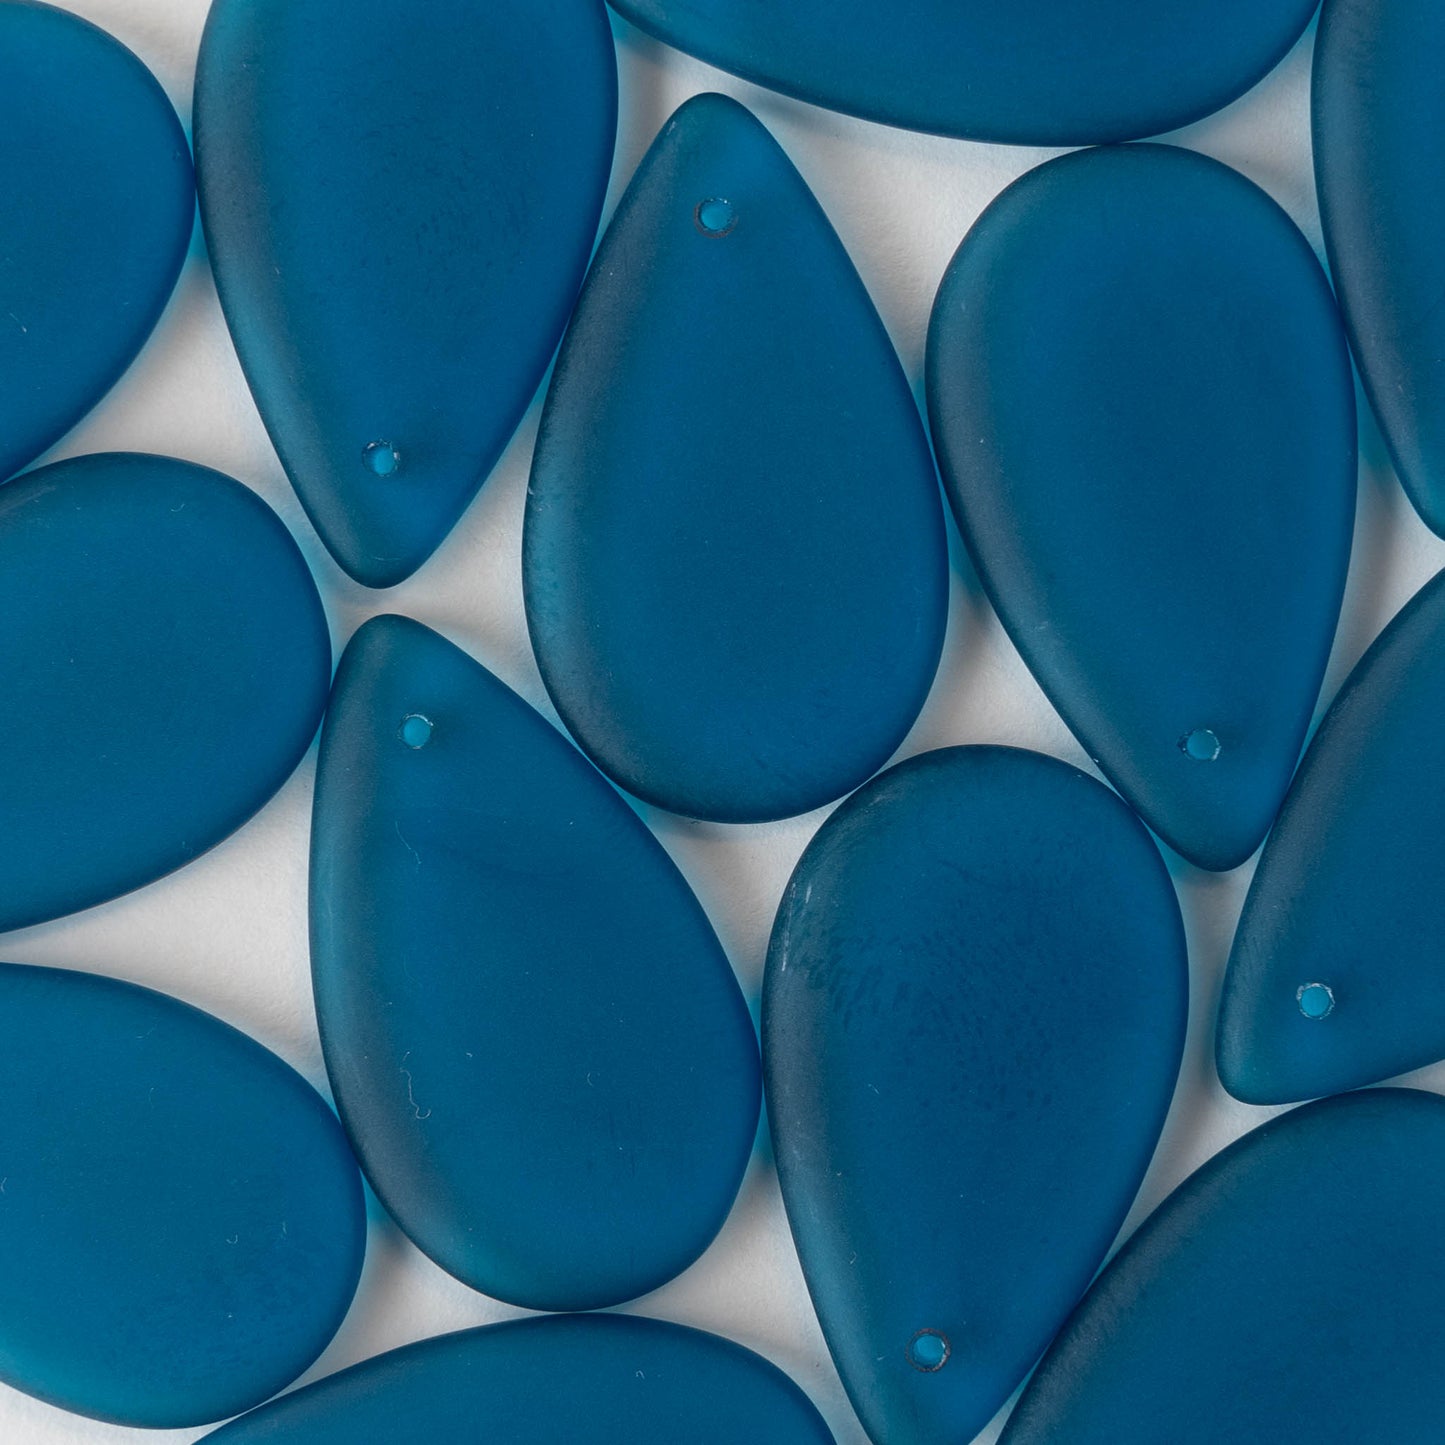 30x18mm Large Flat Glass Teardrop Beads - Matte Teal Blue - 10 Beads